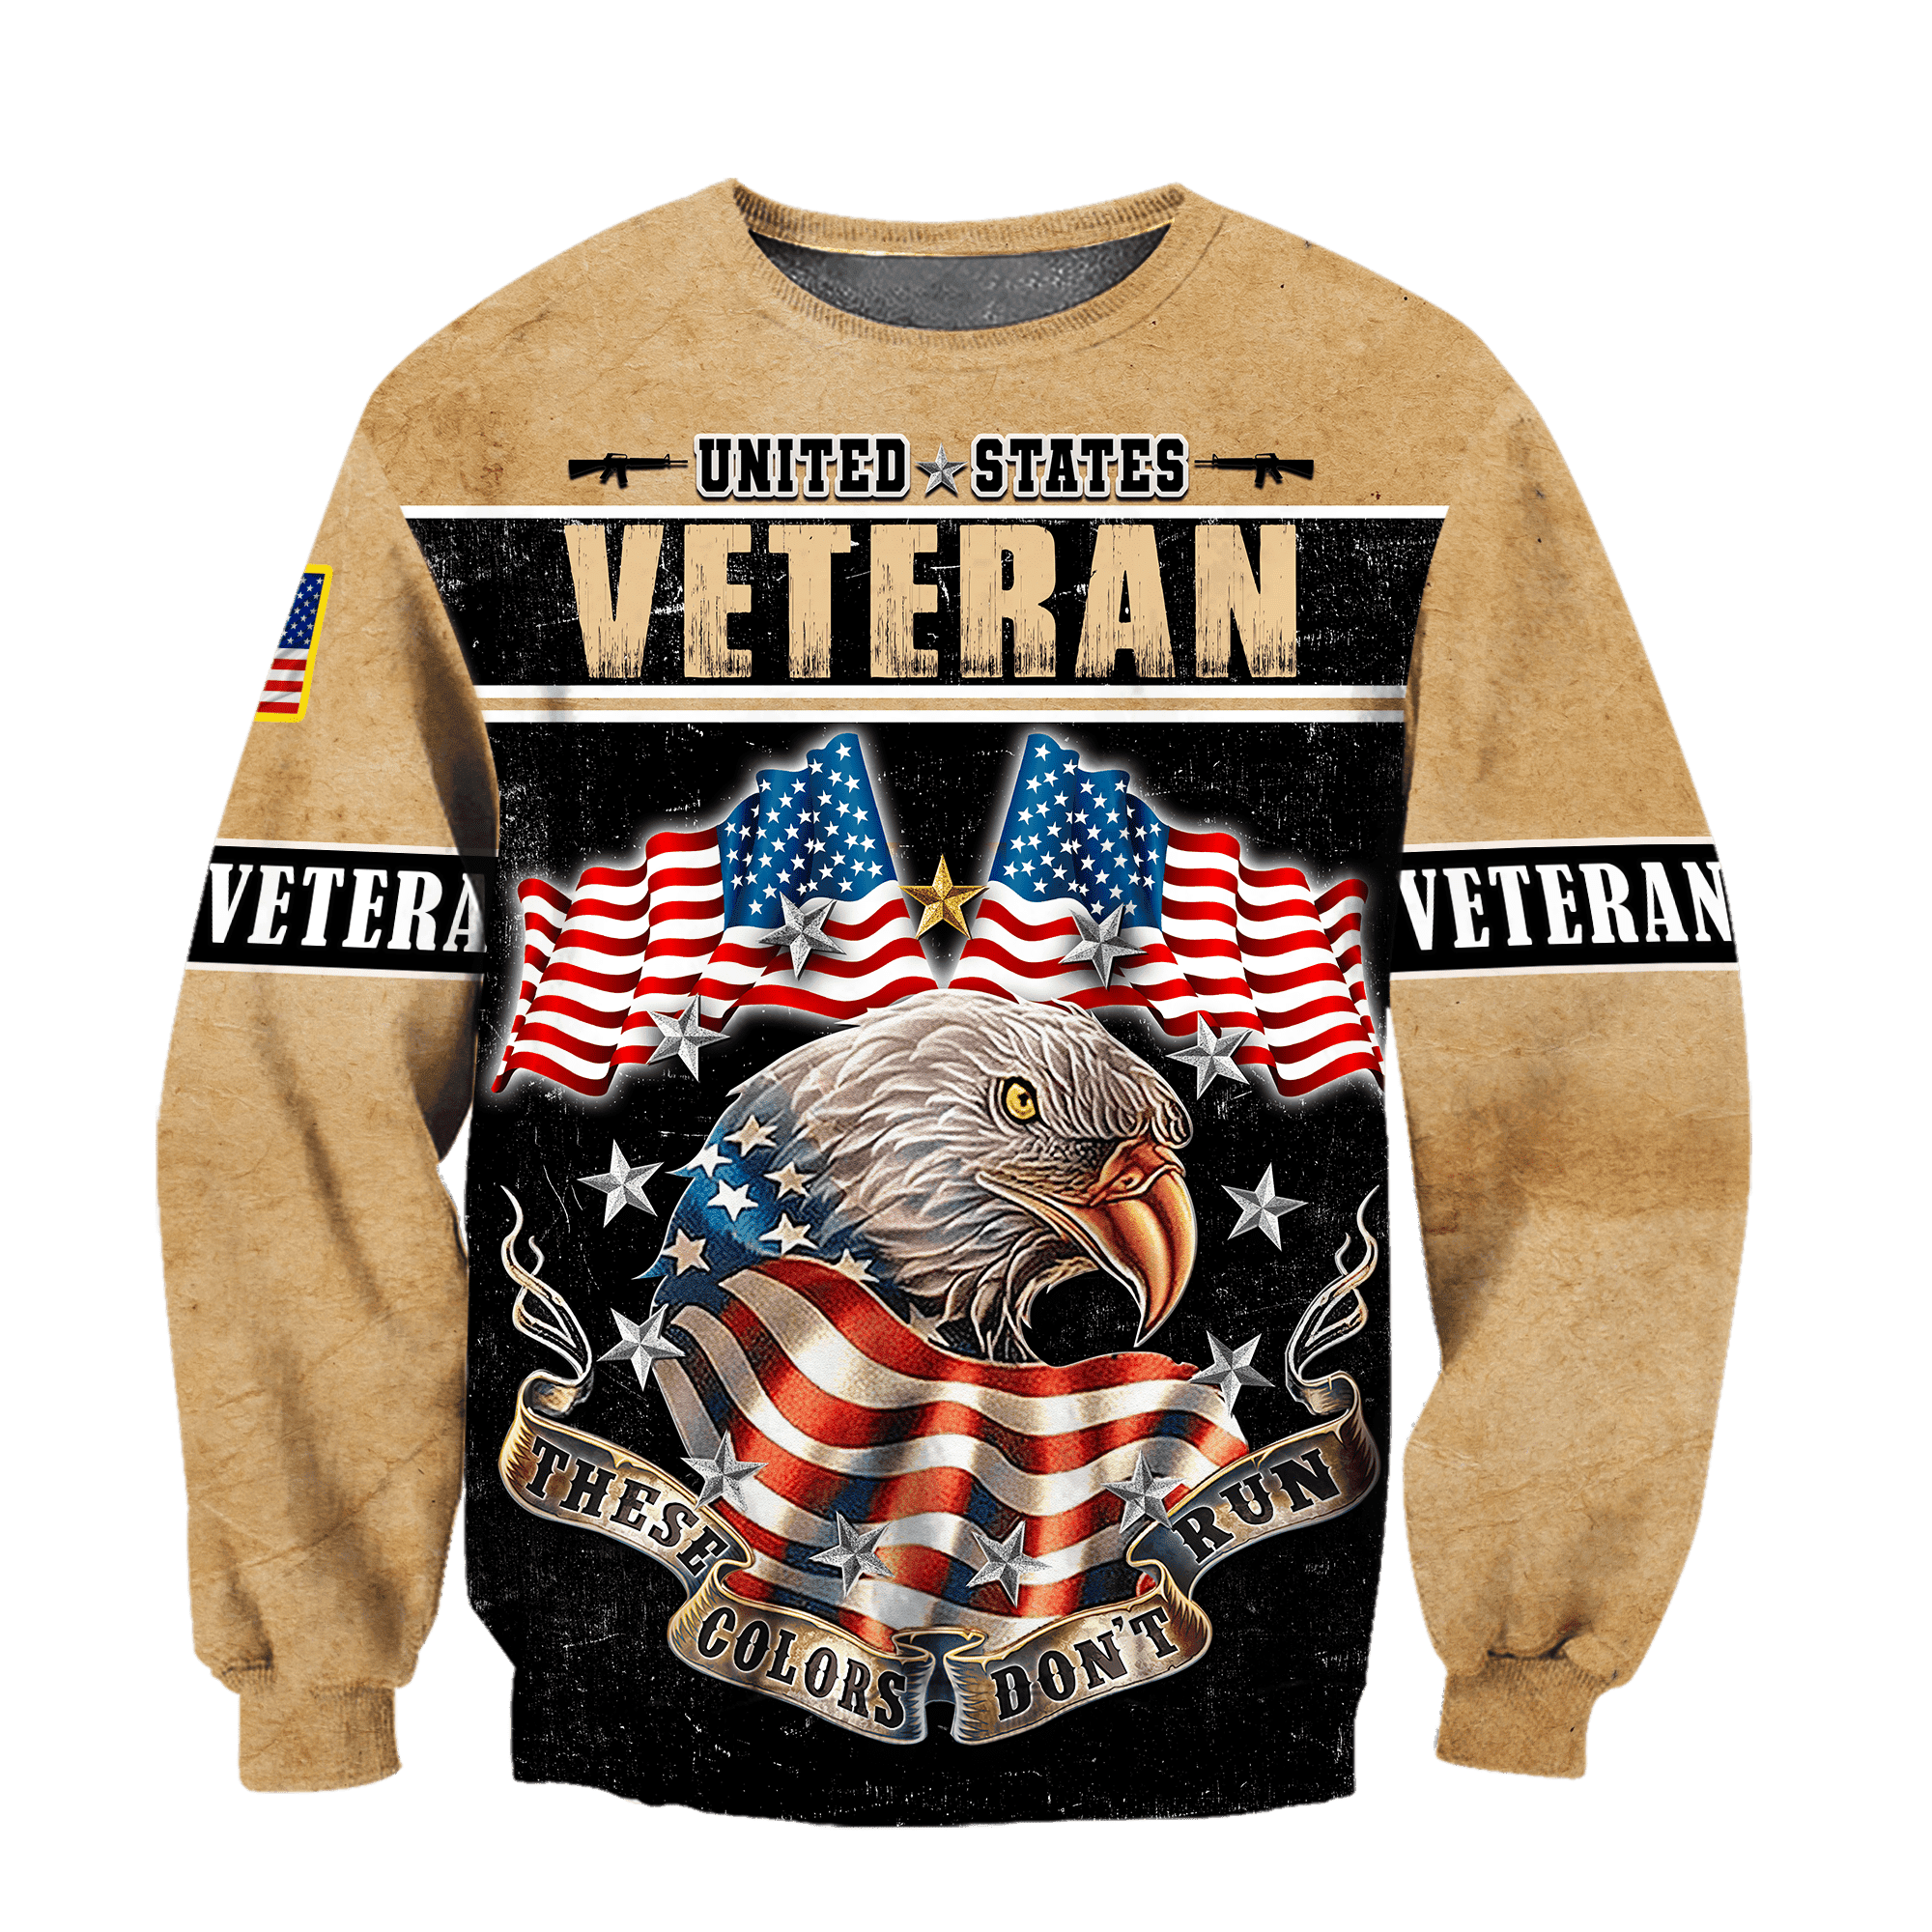 US Veteran - These Color Don't Run Unisex Sweatshirt TT121001-VET